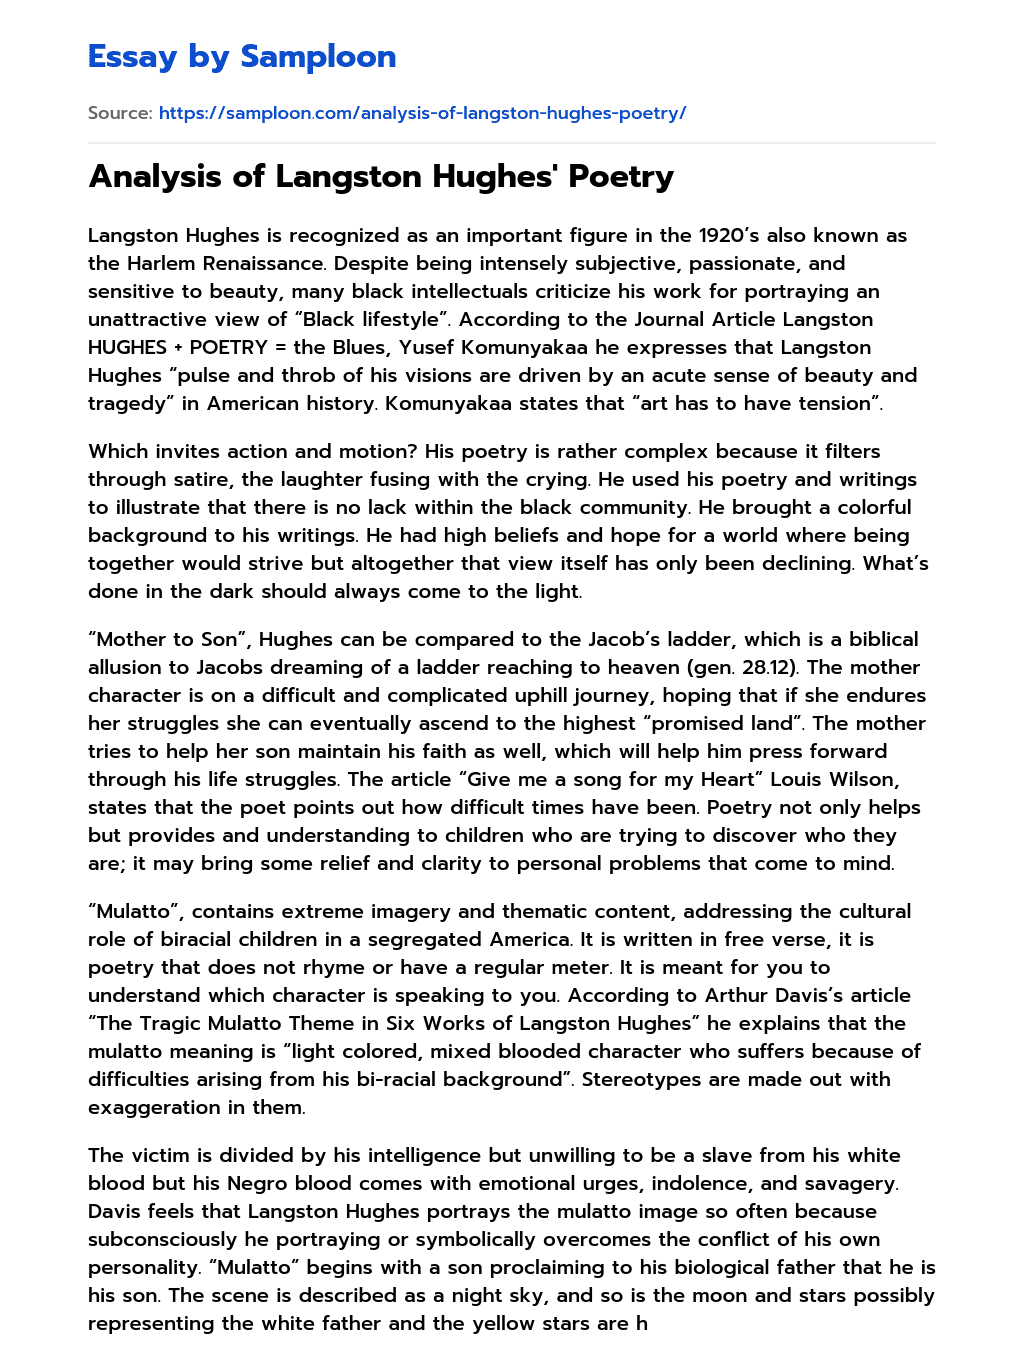 Analysis of Langston Hughes’ Poetry essay